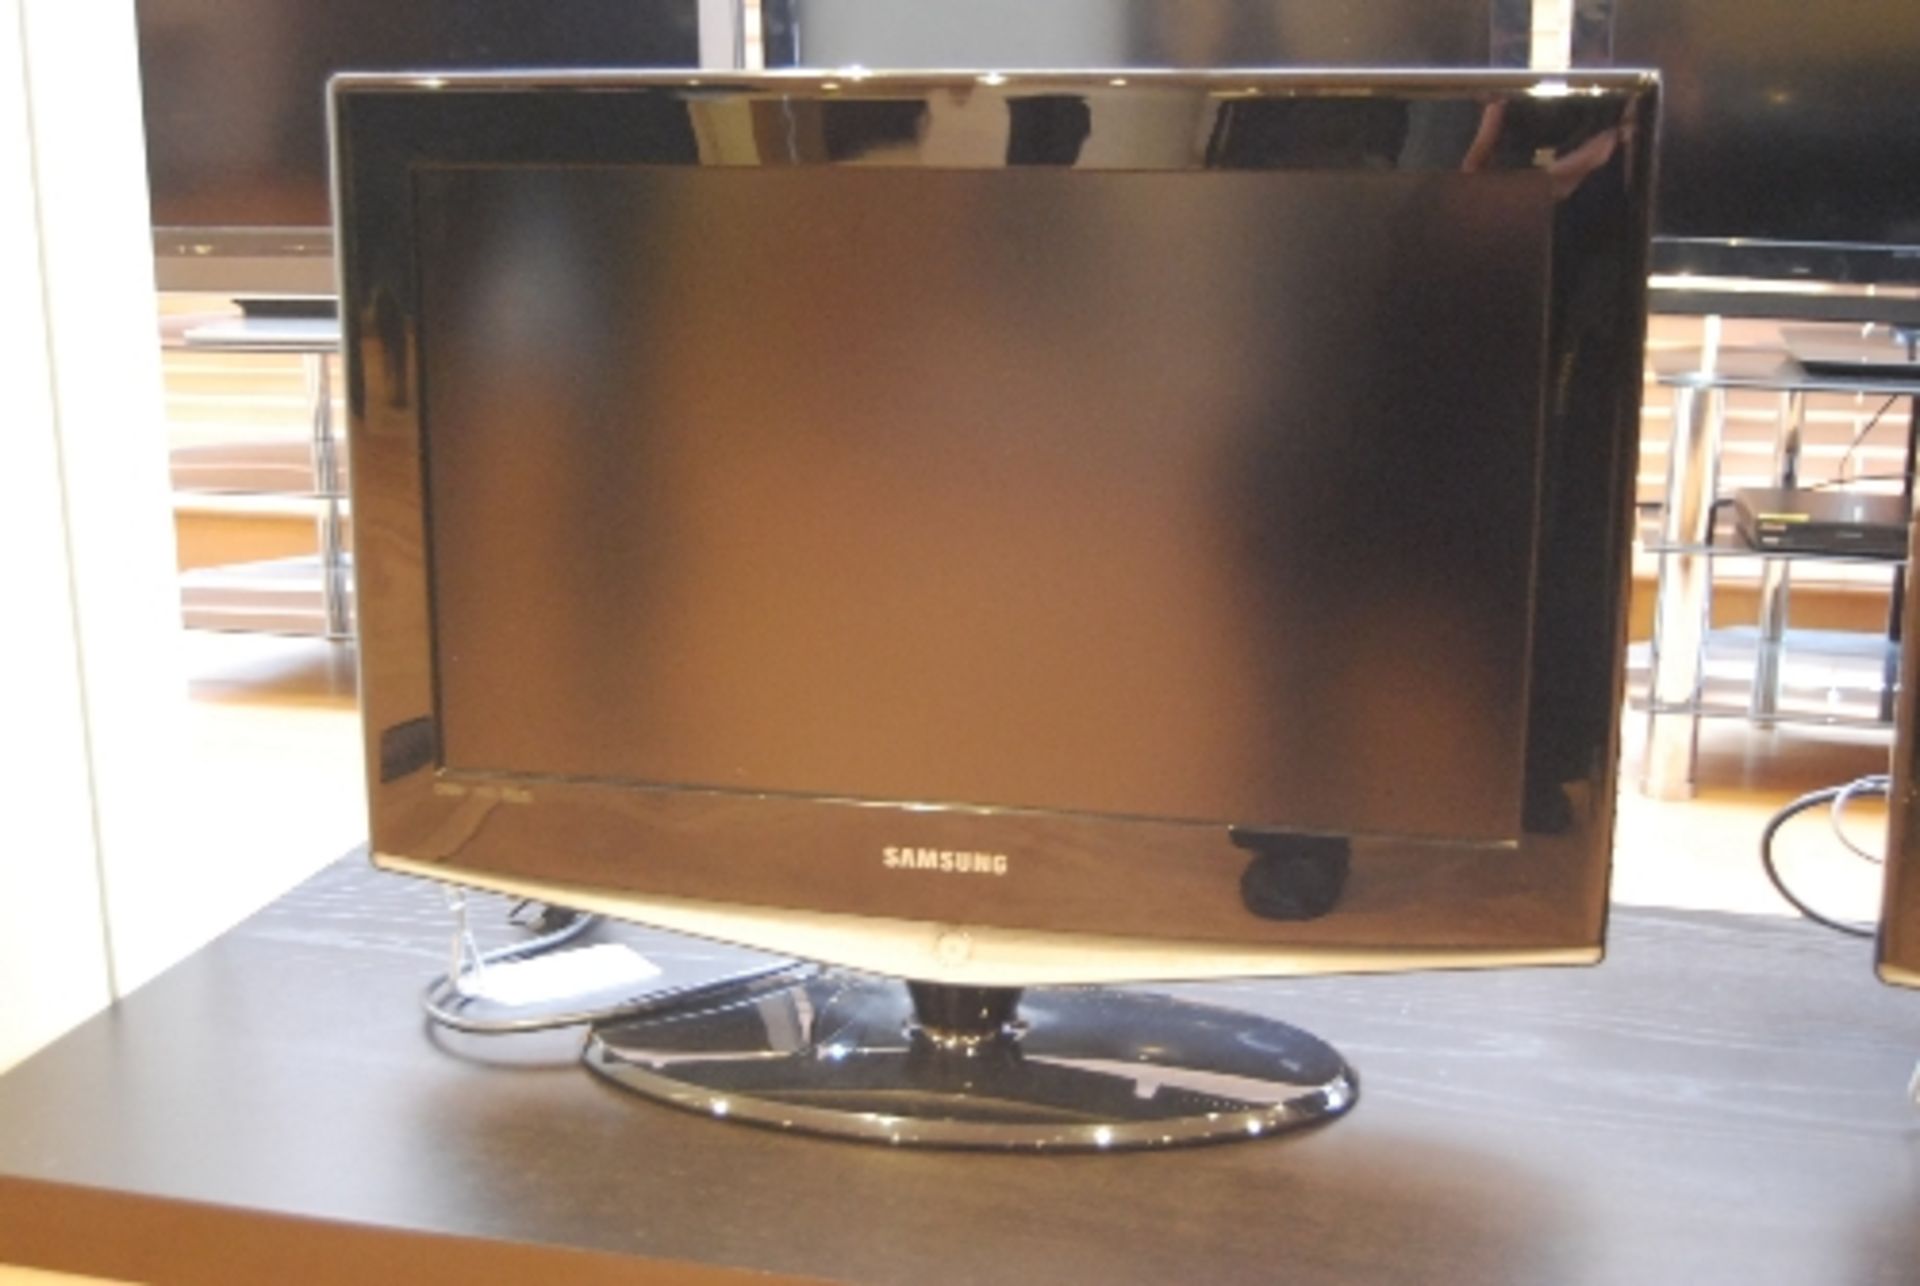 Samsung LE26 R74BD flat screen television, no remote